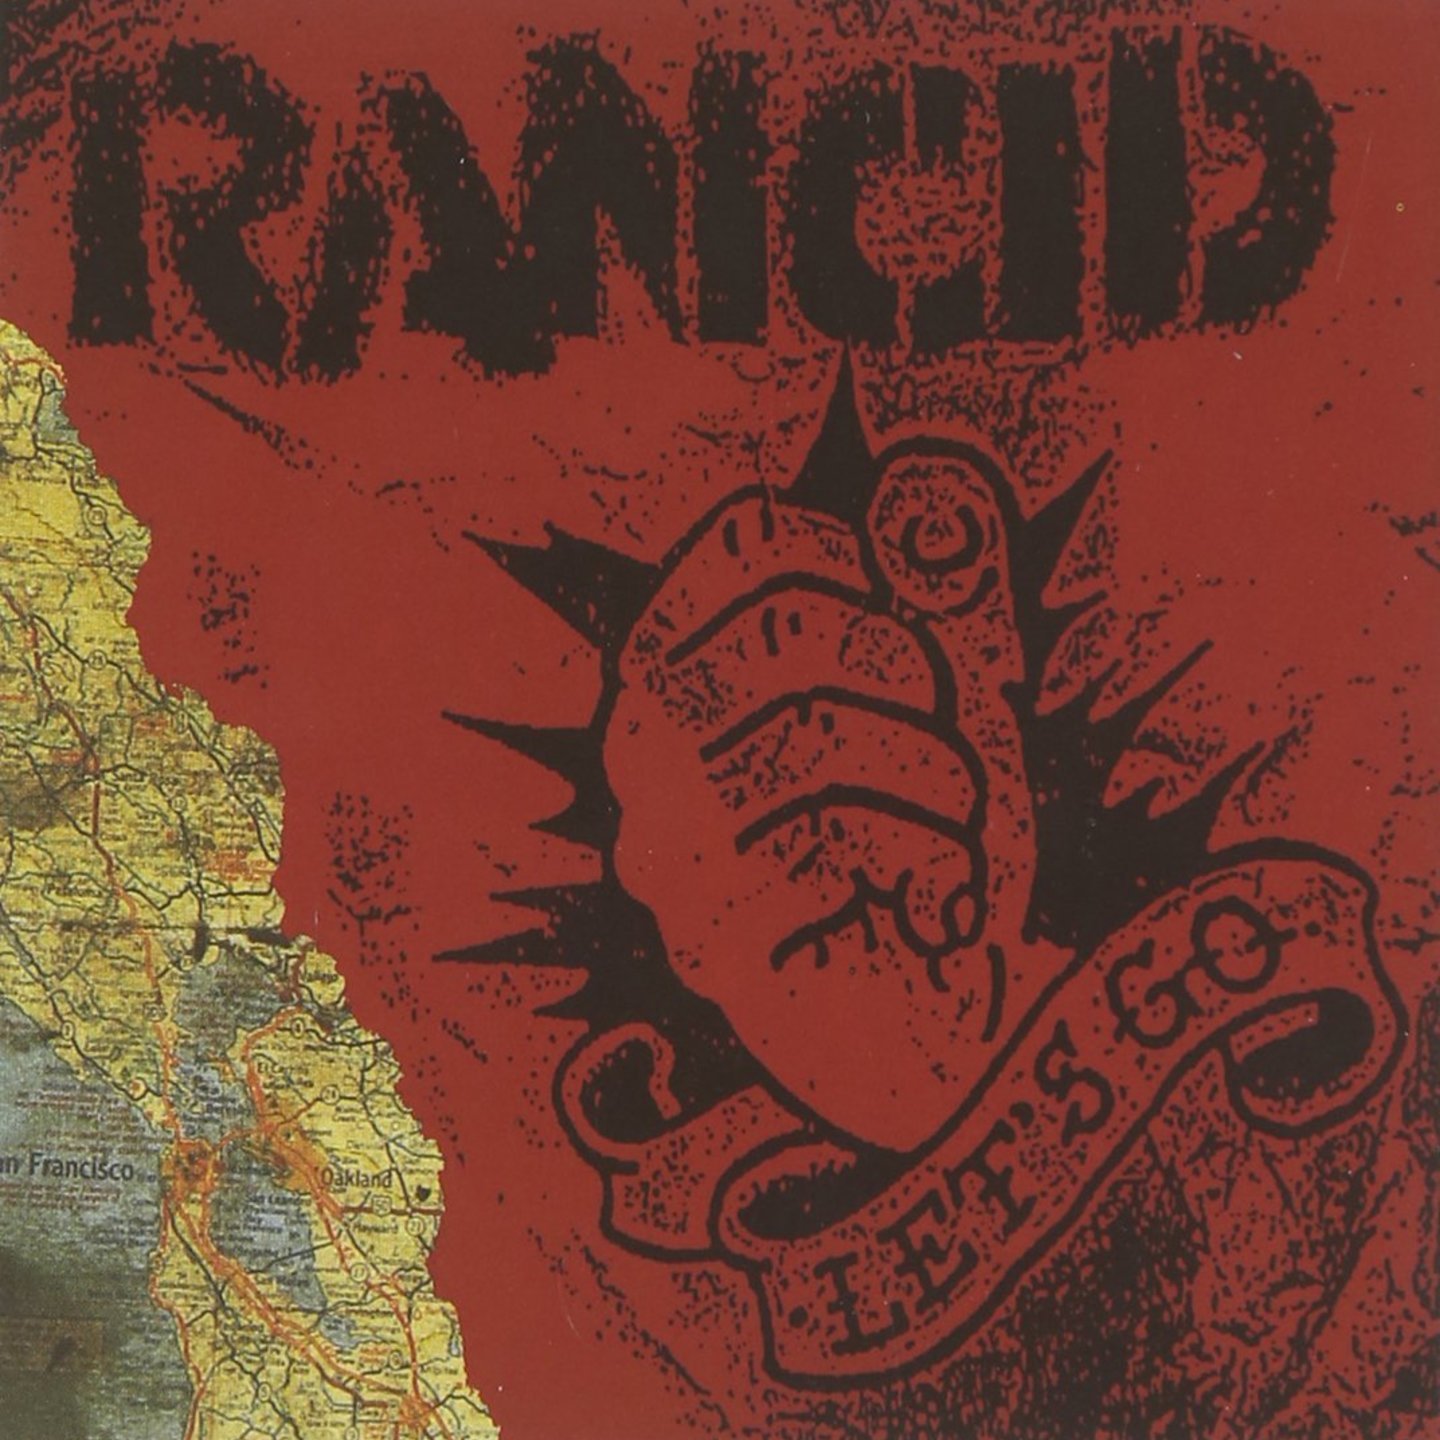 RANCID - Lets Go LP